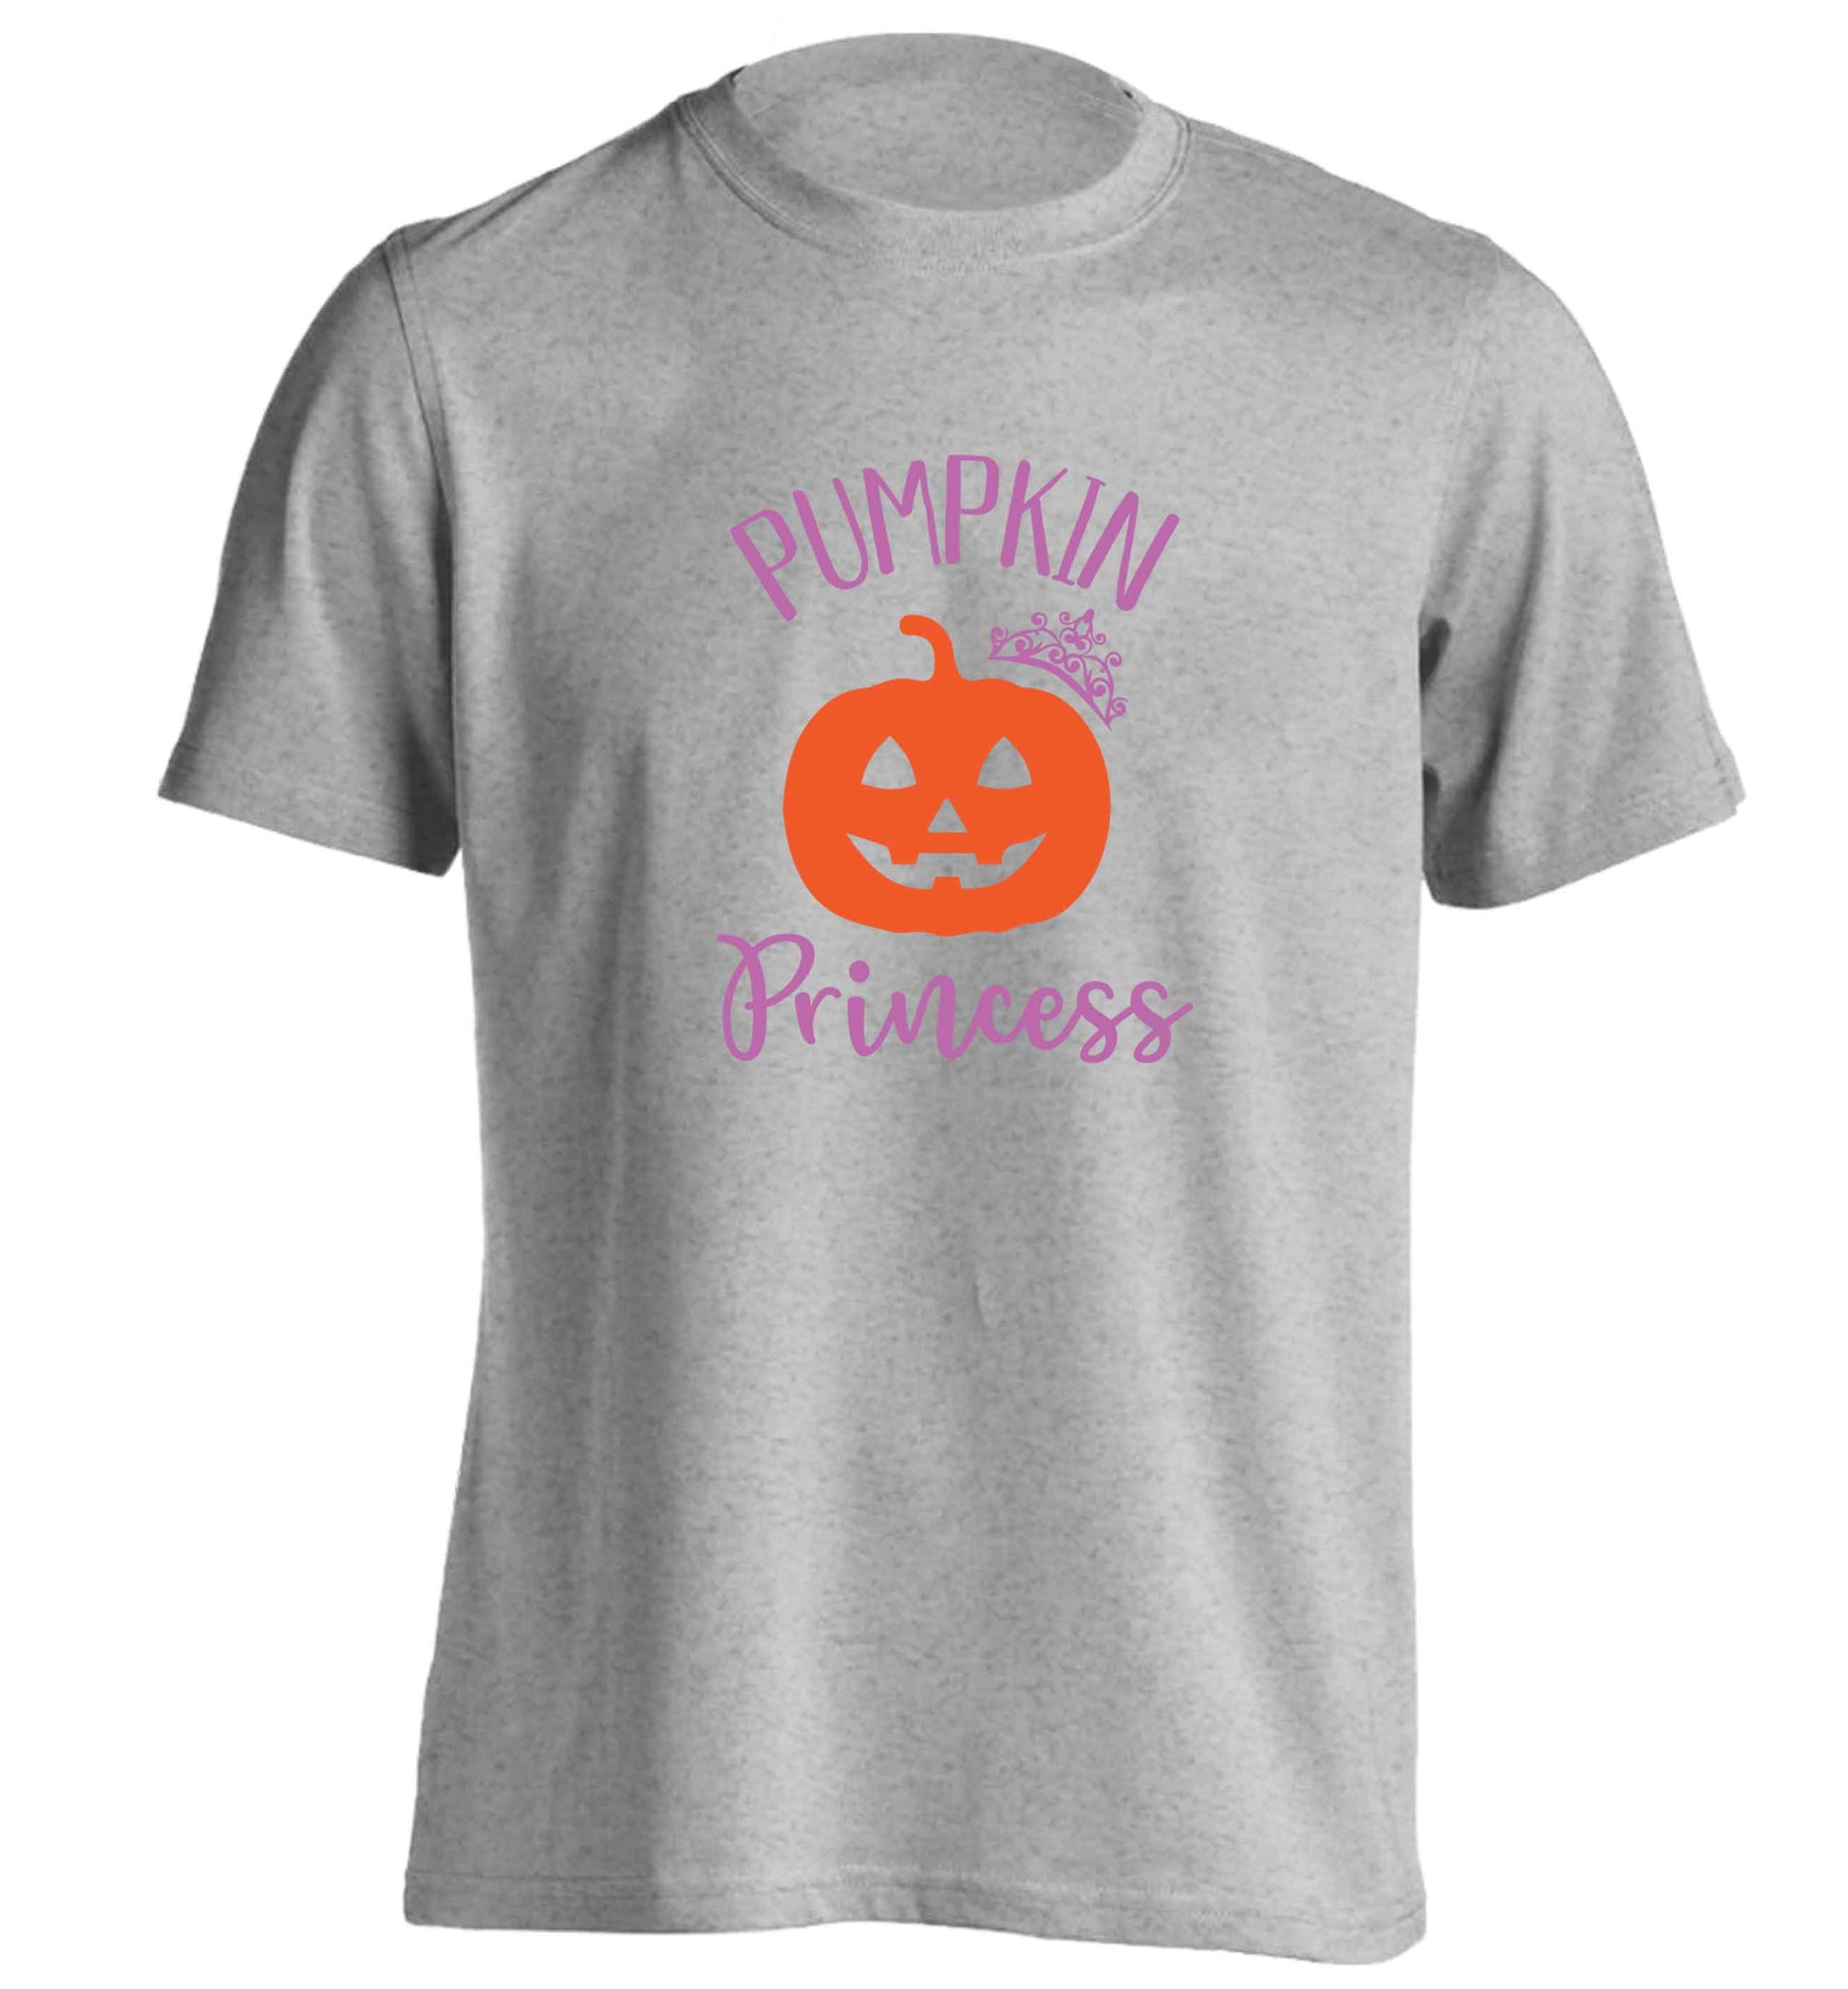 Happiness Pumpkin Spice adults unisex grey Tshirt 2XL